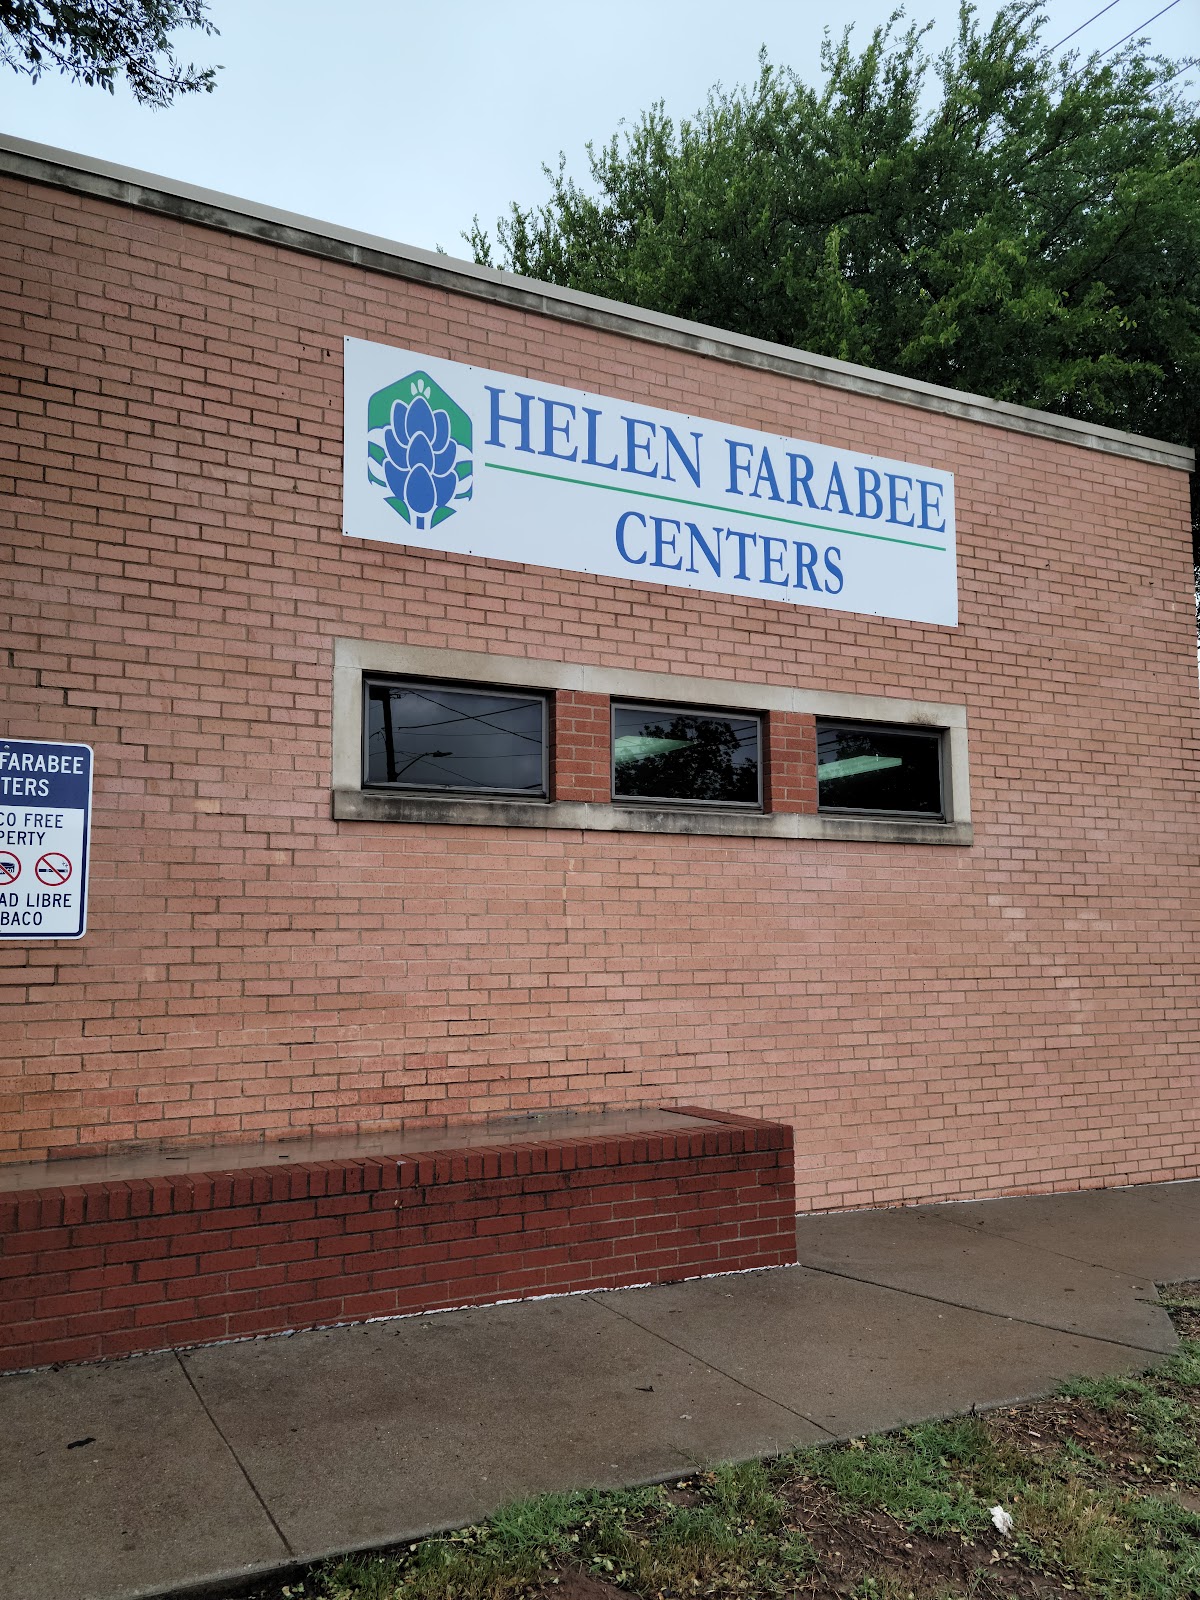 Helen Farabee Centers - Wichita County